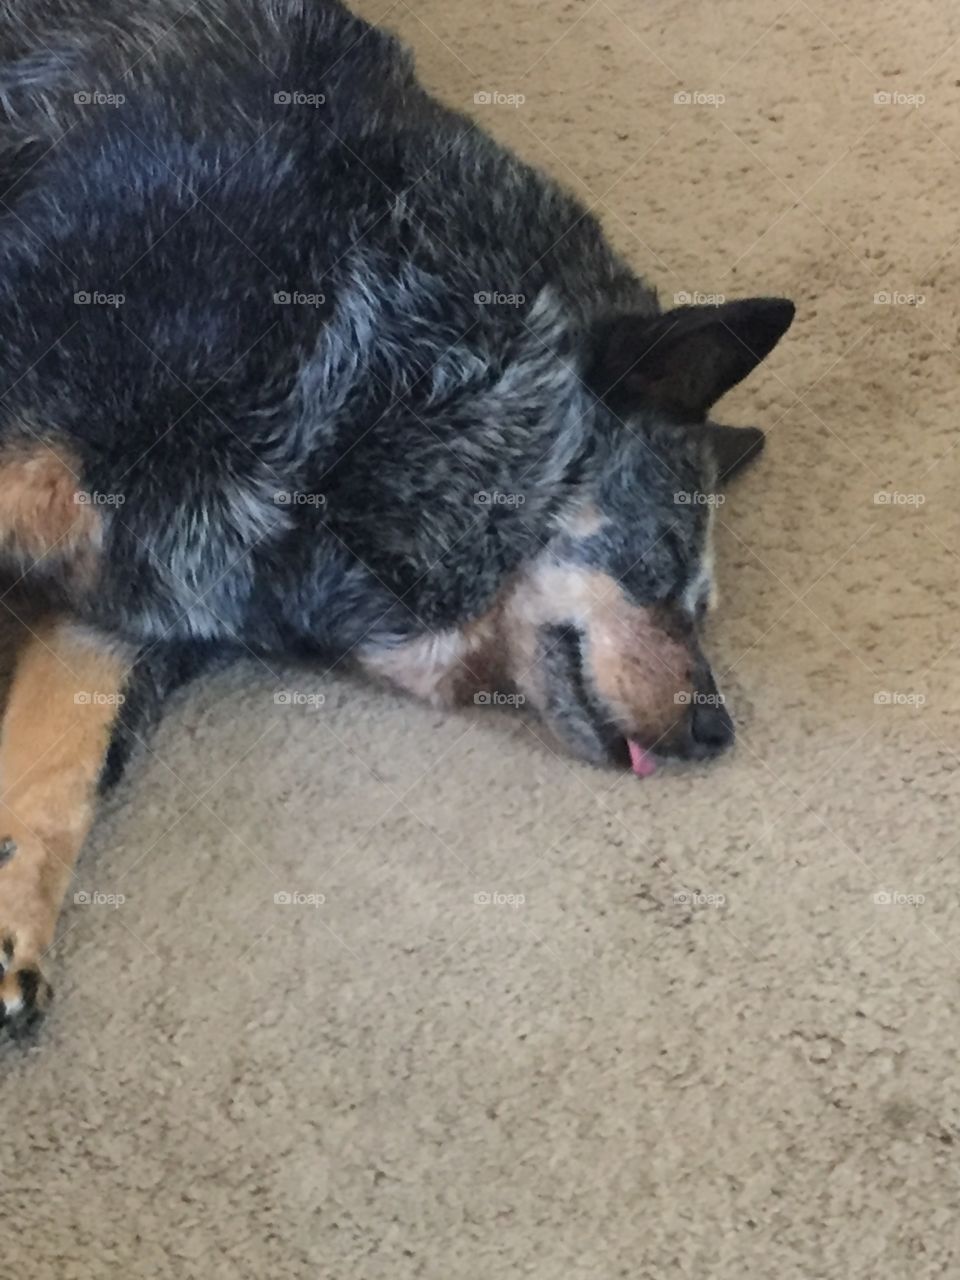 Sleeping dog with tongue 